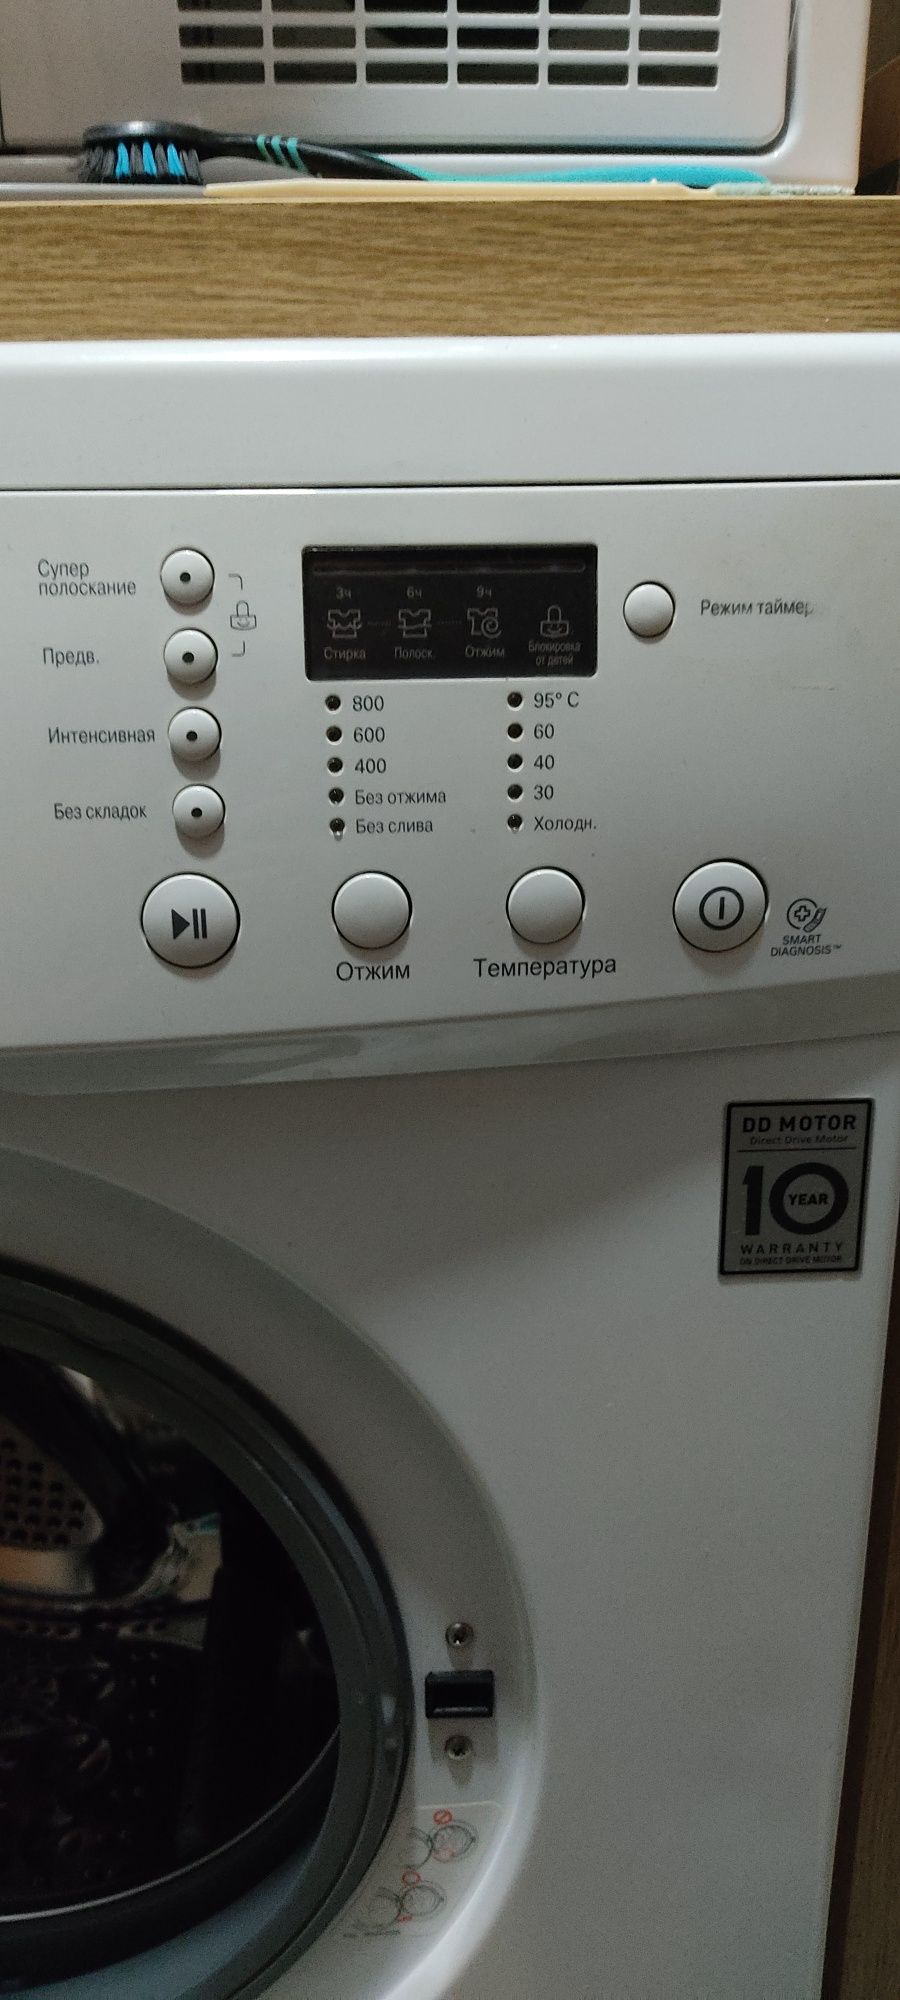 Продам пральну машину LG F8091LD DirectDrive